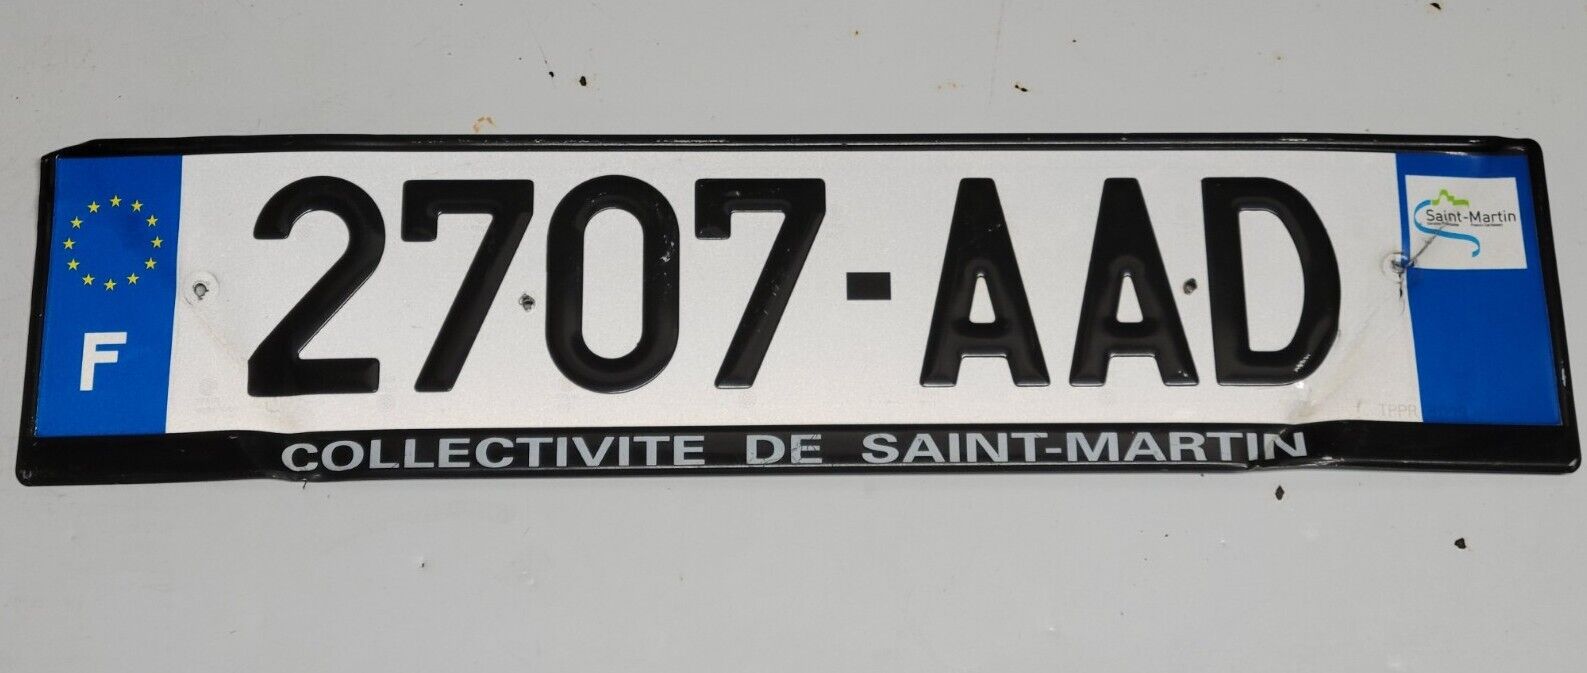 Saint-Martin License Plate FRENCH Collectivite De  2707-AAD Caraibe Francaise